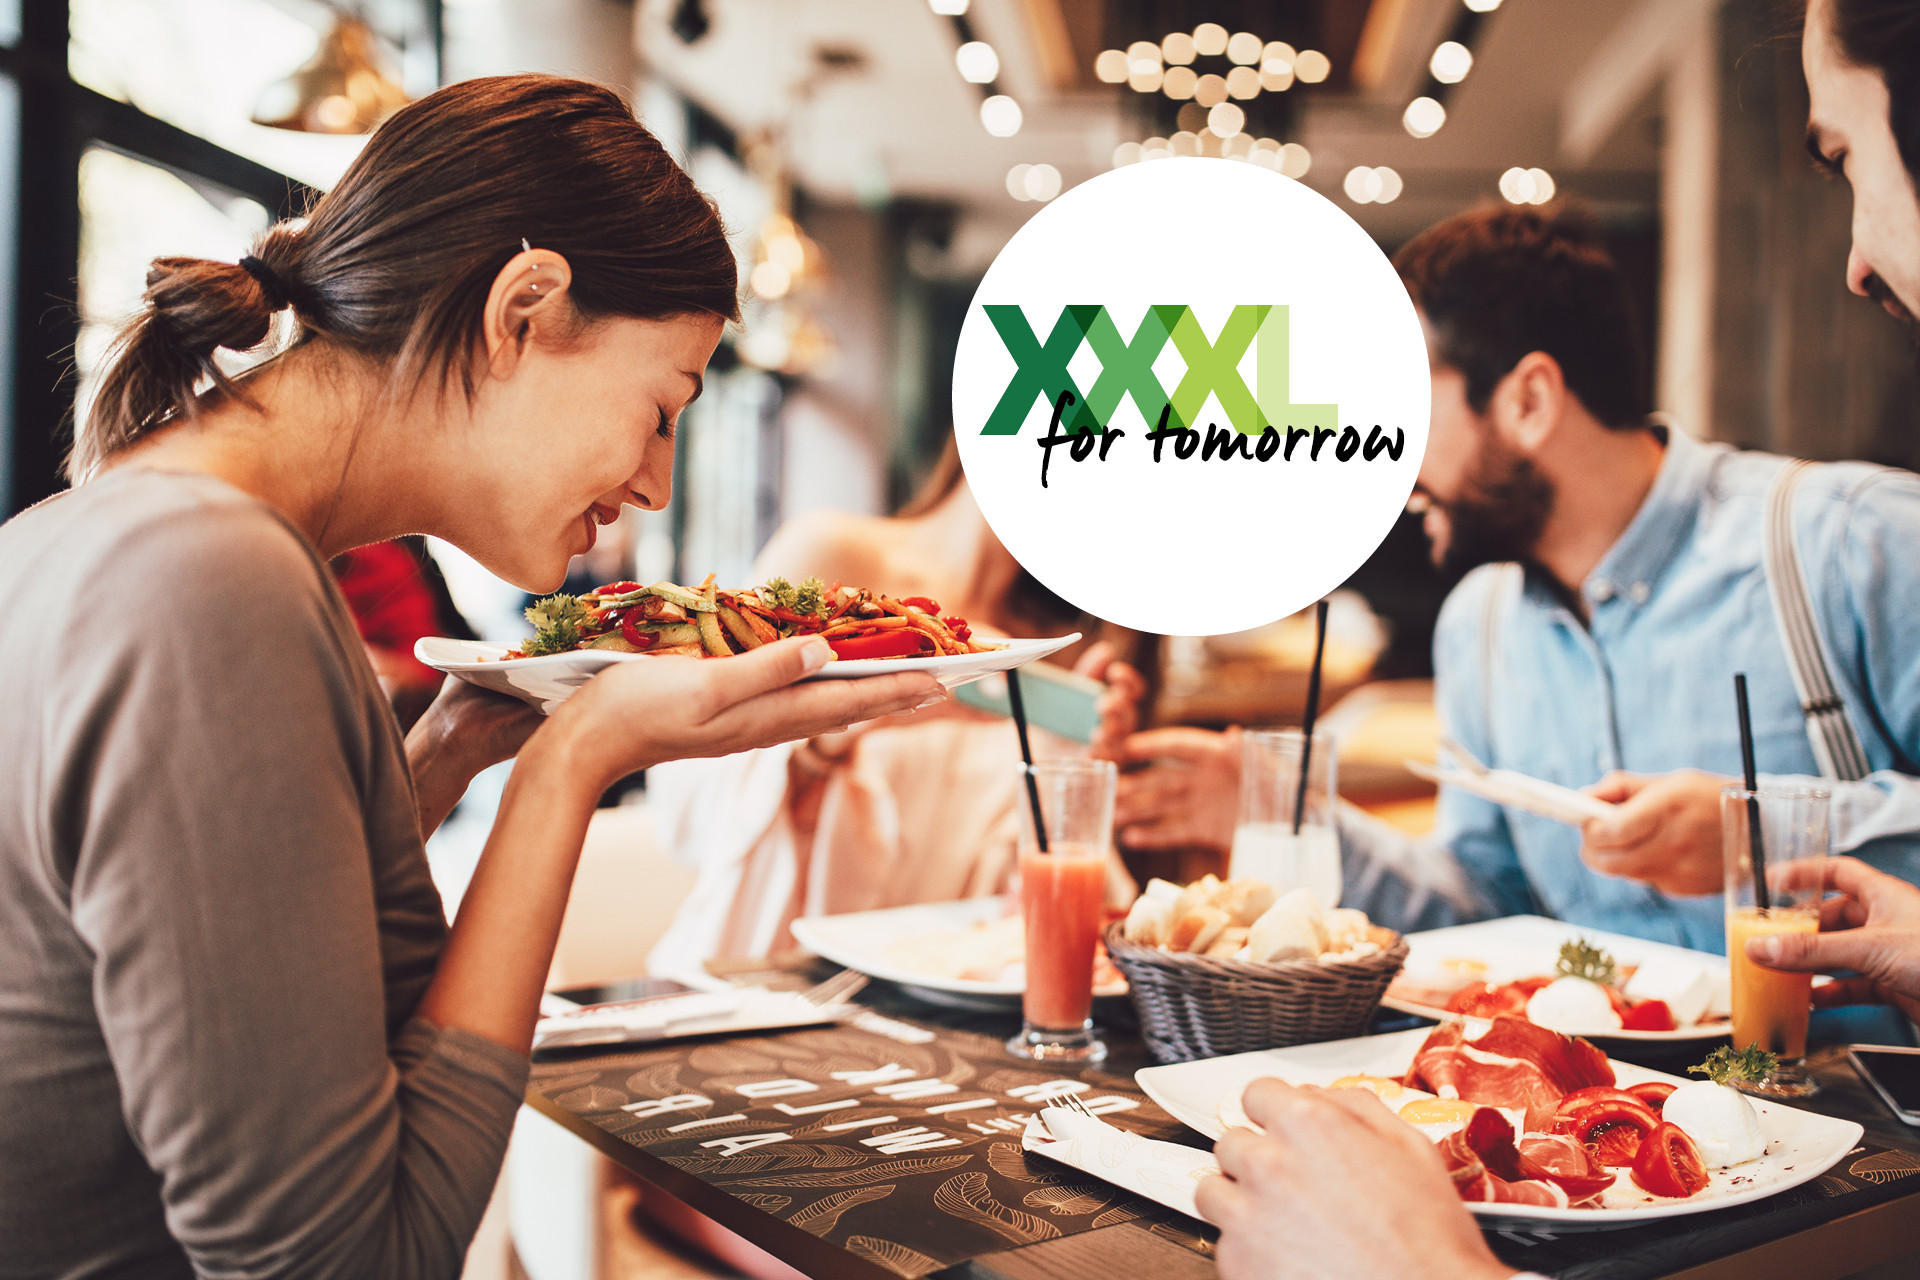 xxxl-restaurant